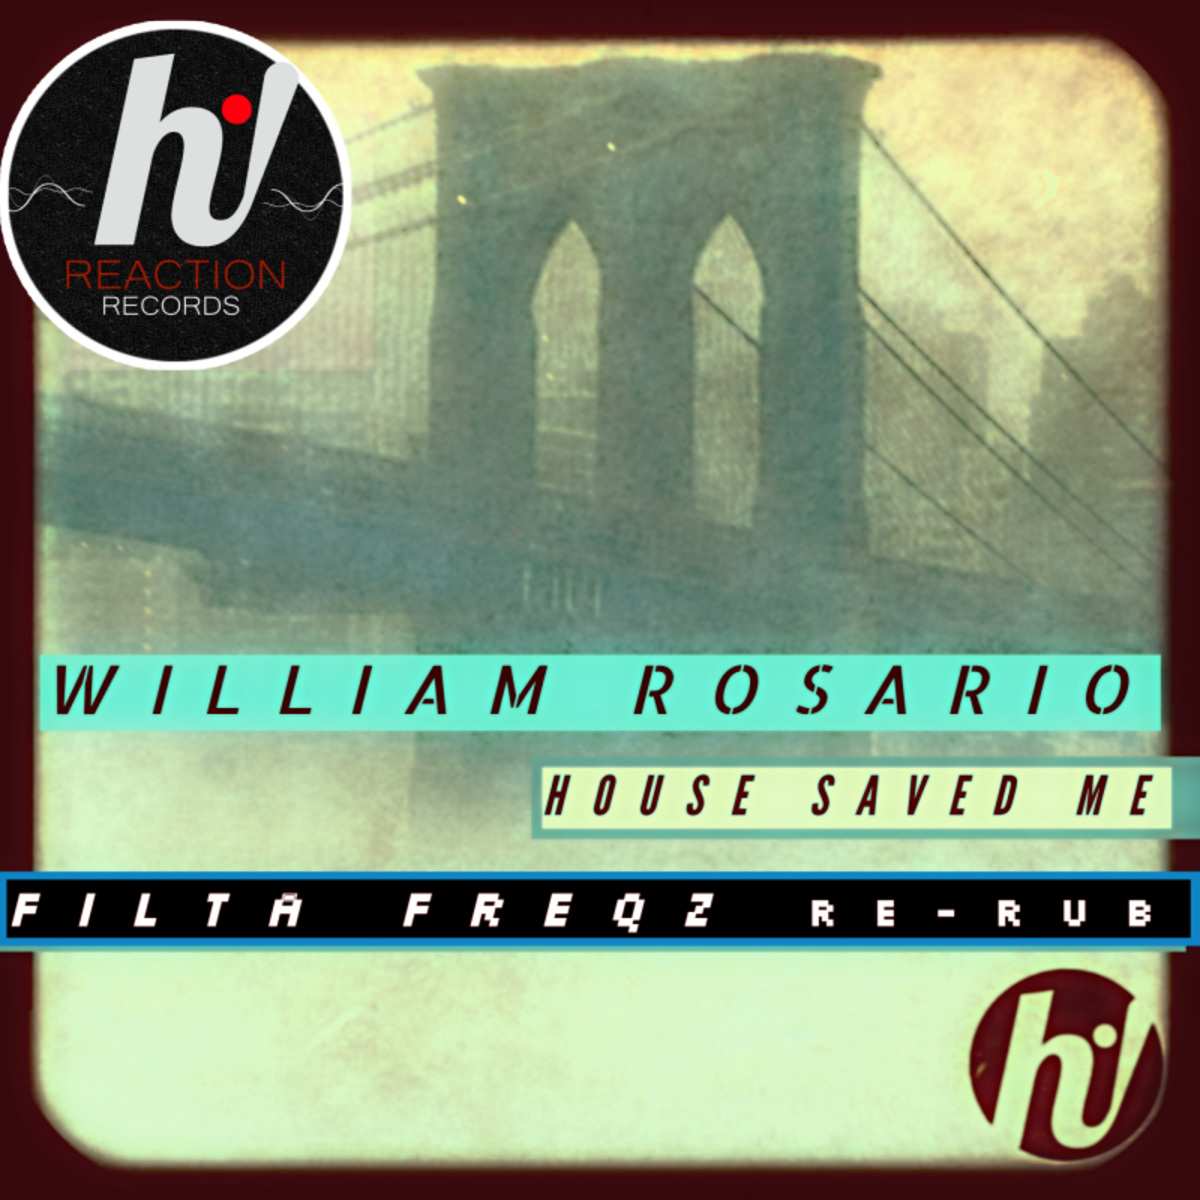 William Rosario - House Saved Me / Hi! Reaction